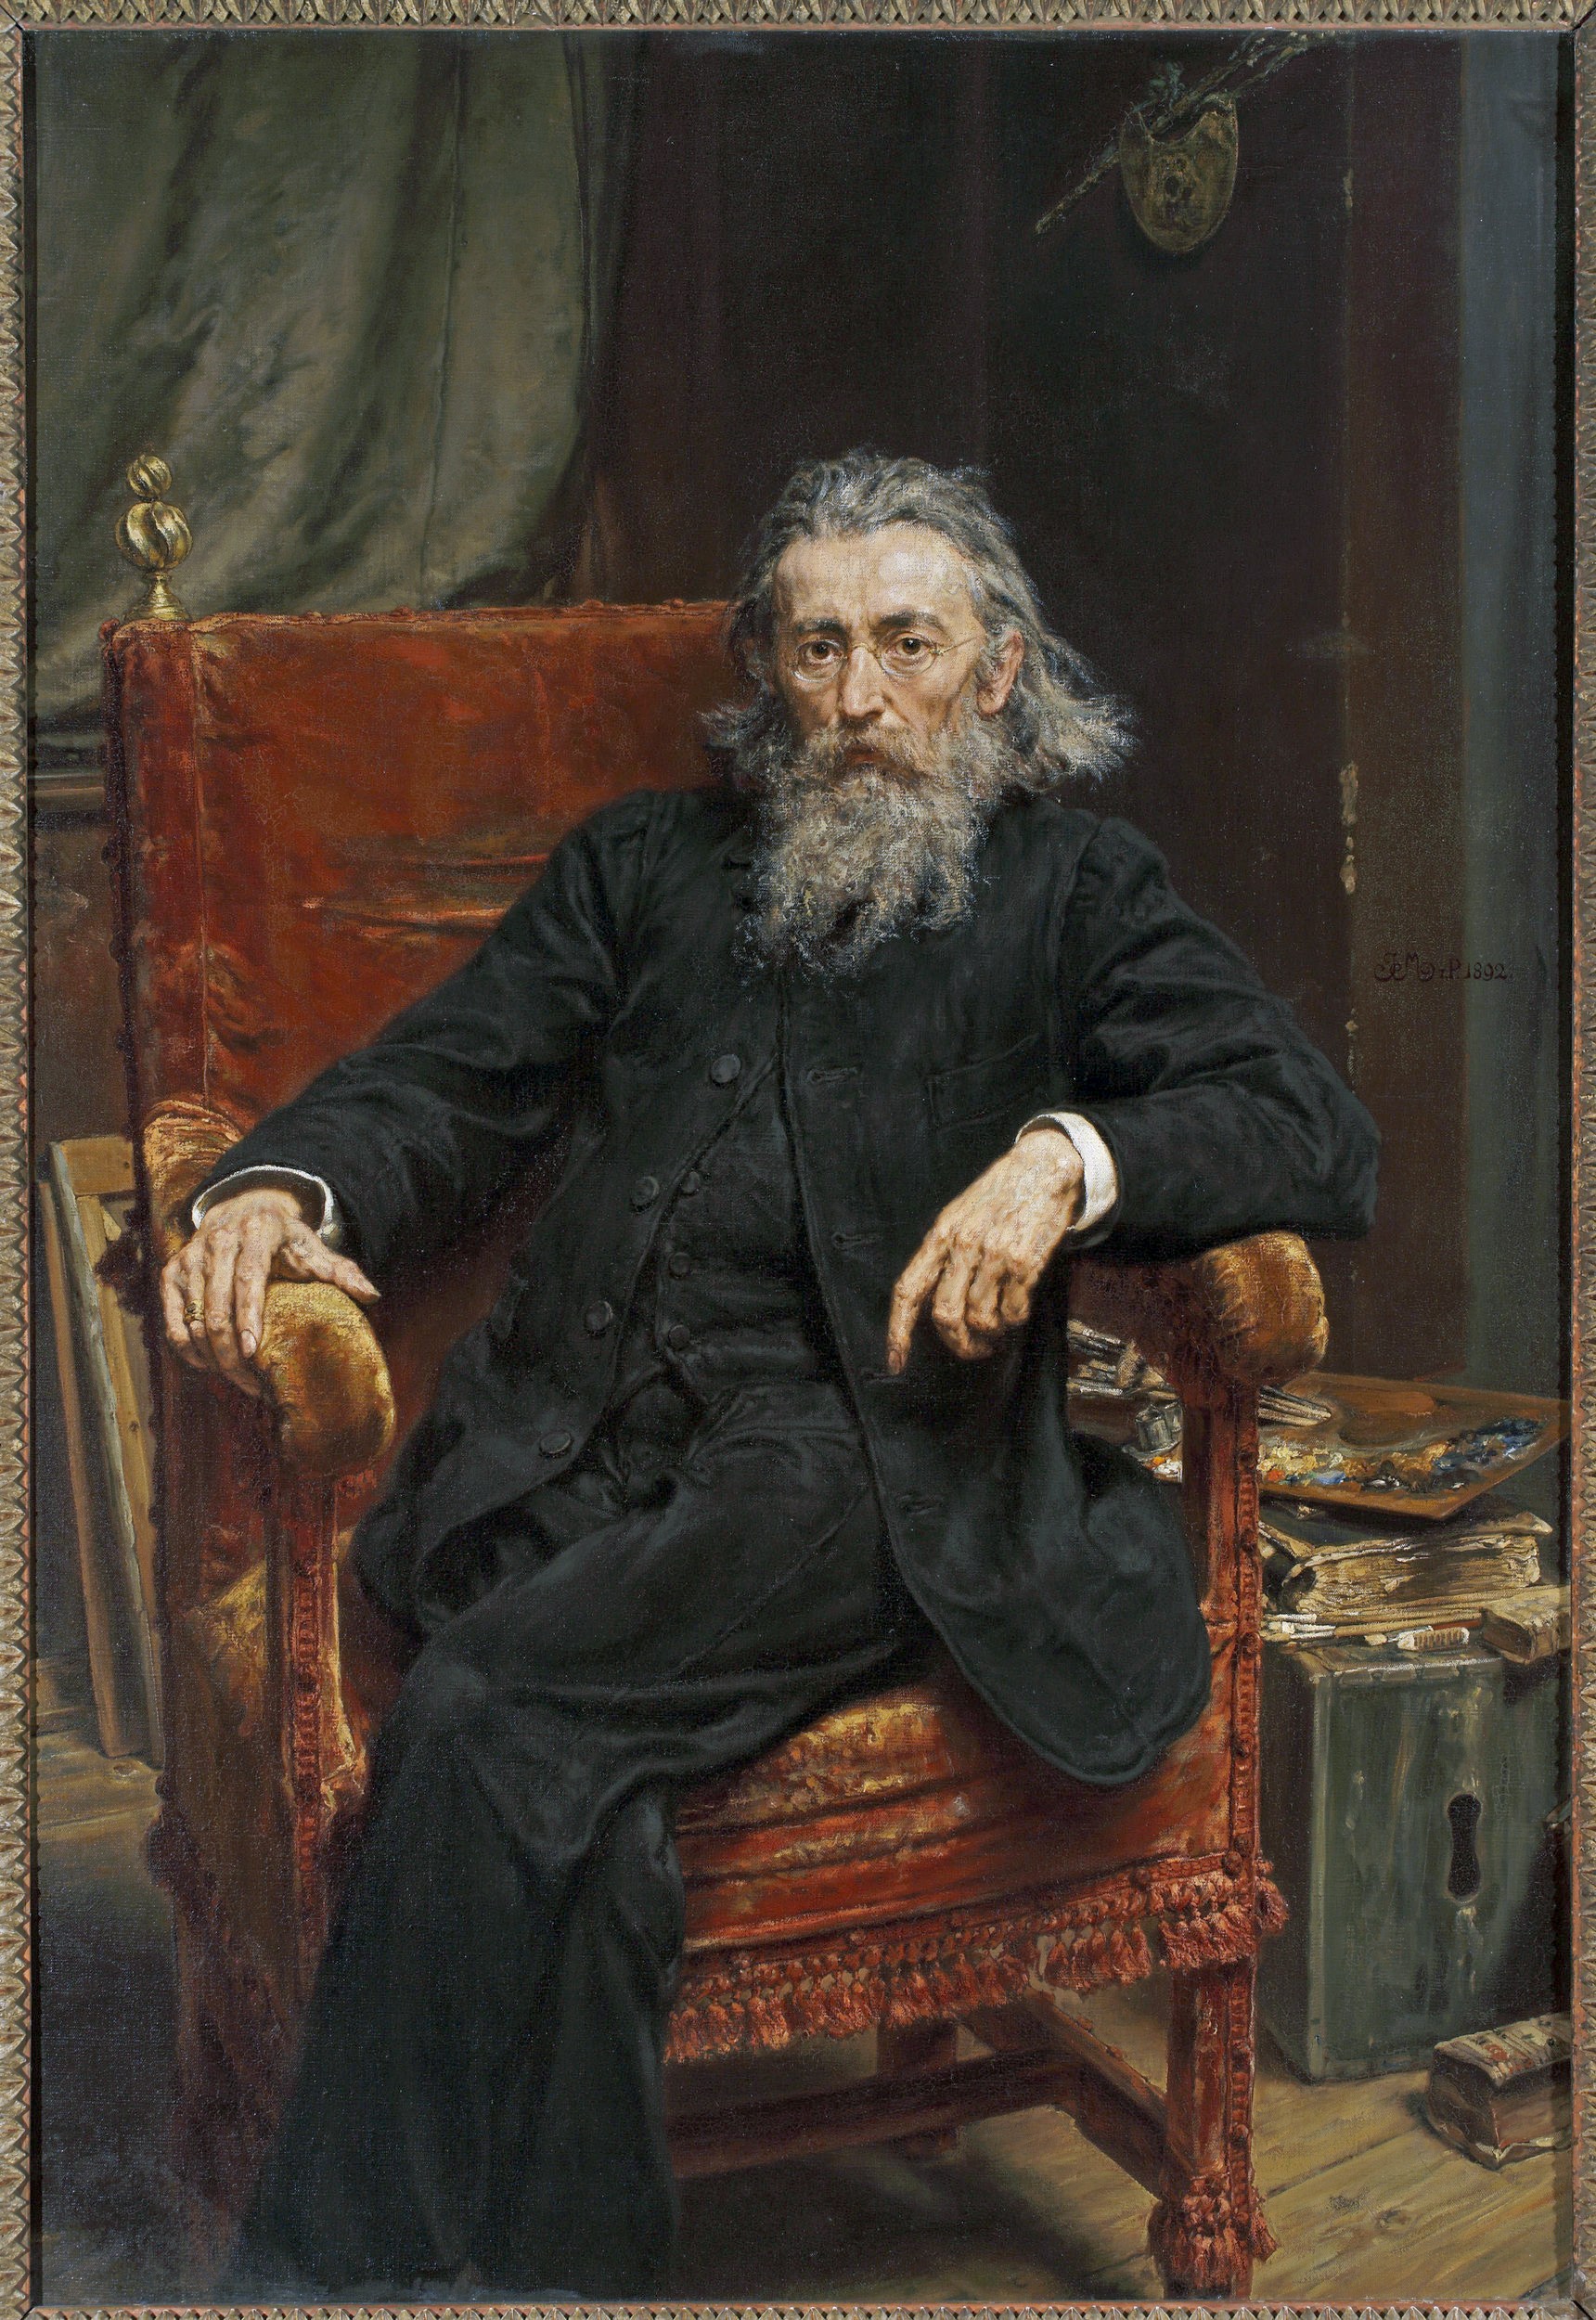 Jan Matejko - June 24, 1838 - November 1, 1893